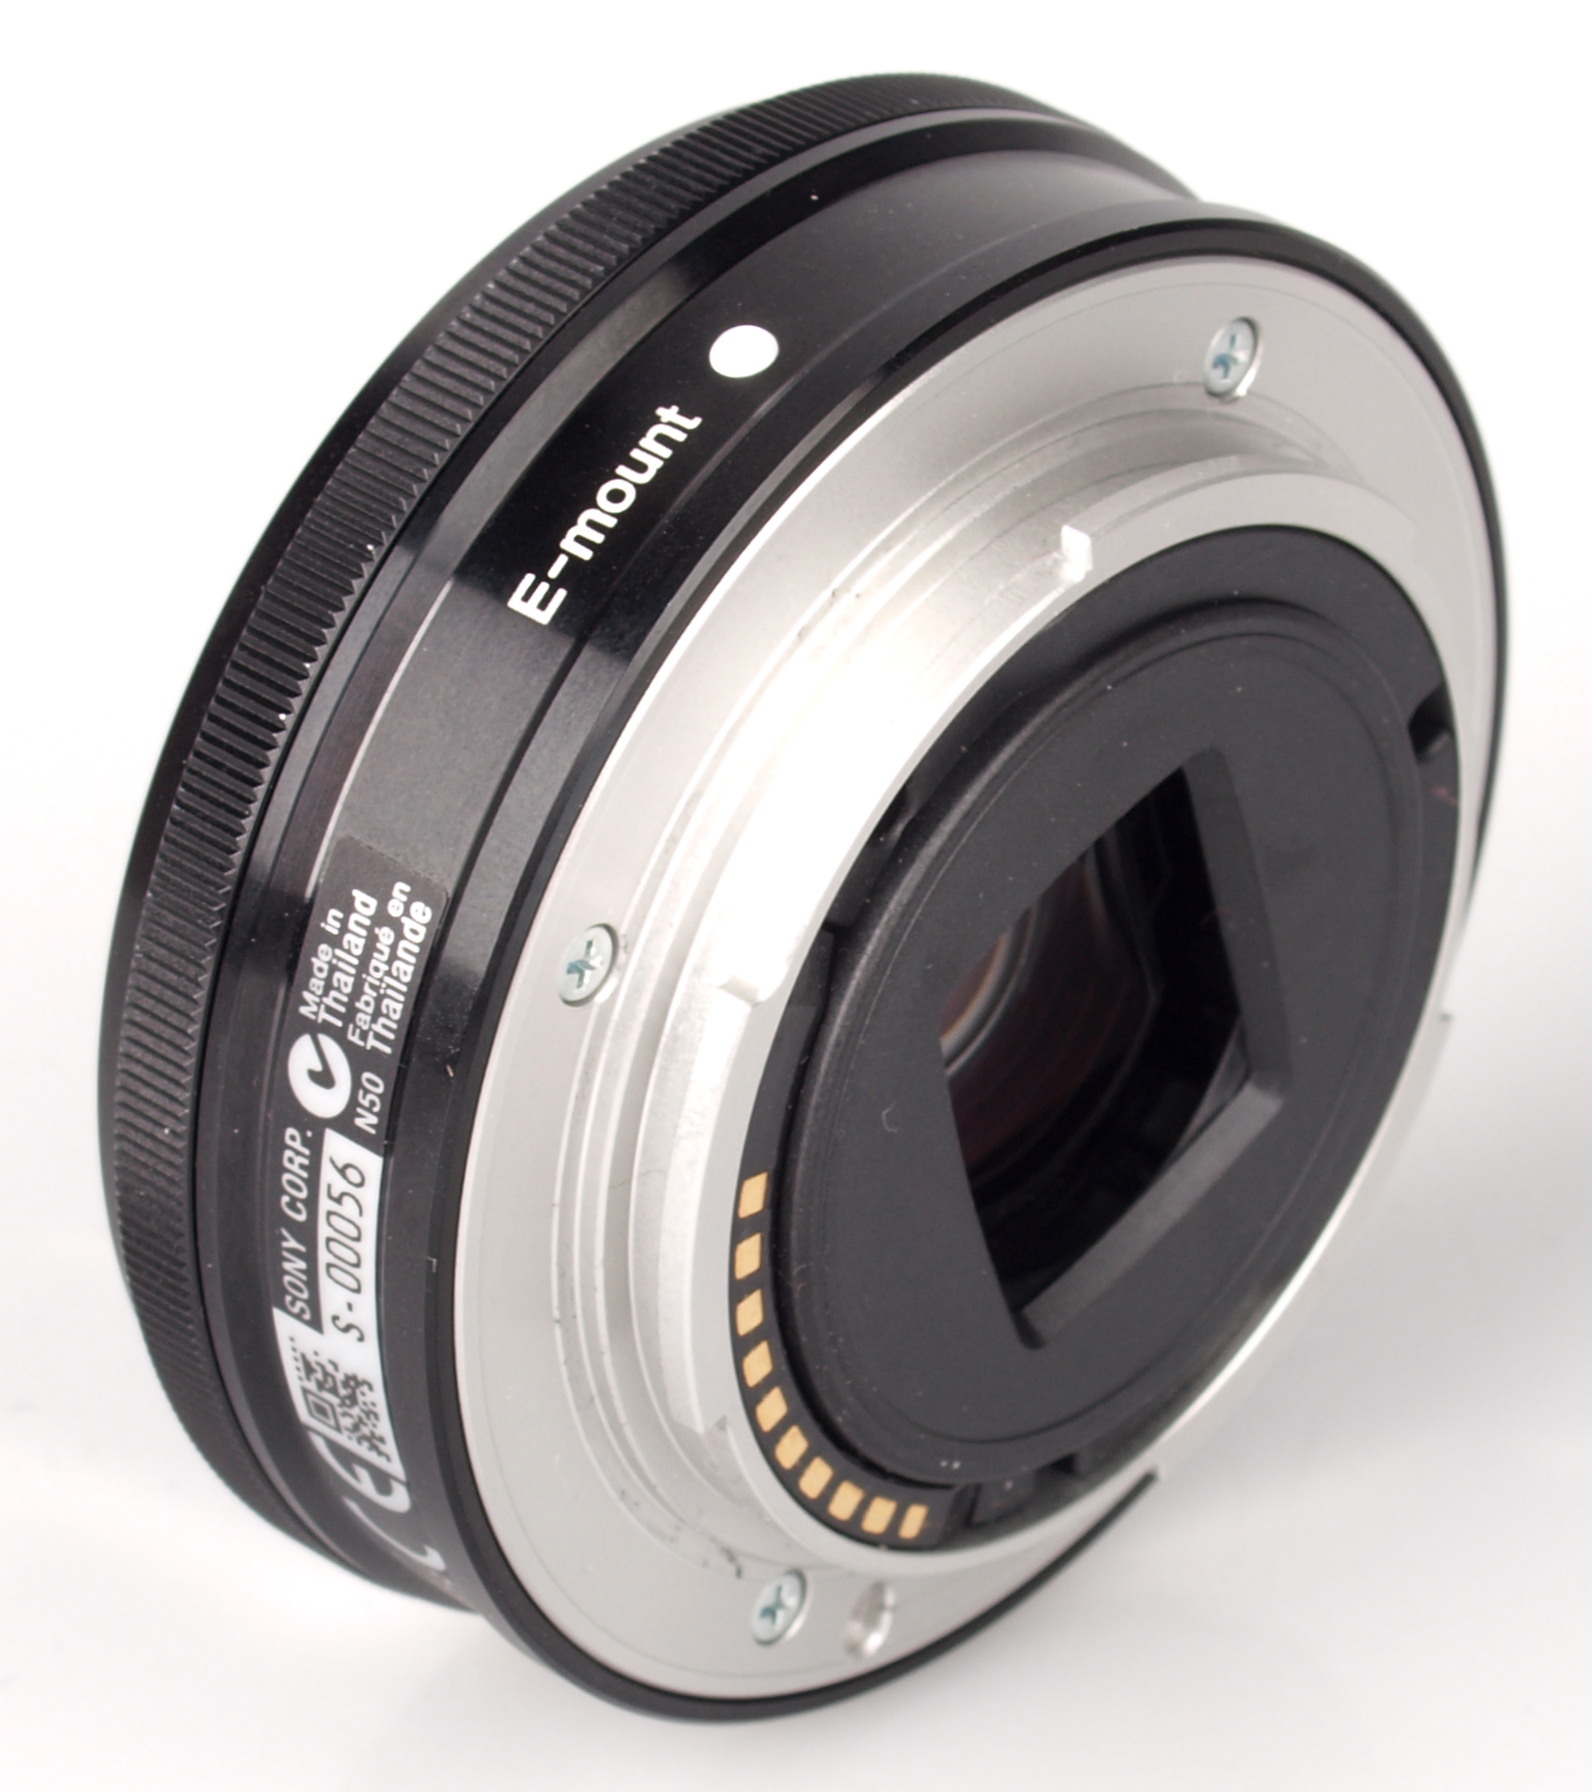 Sony NEX E 20mm f/2.8 Pancake Lens Review ePHOTOzine